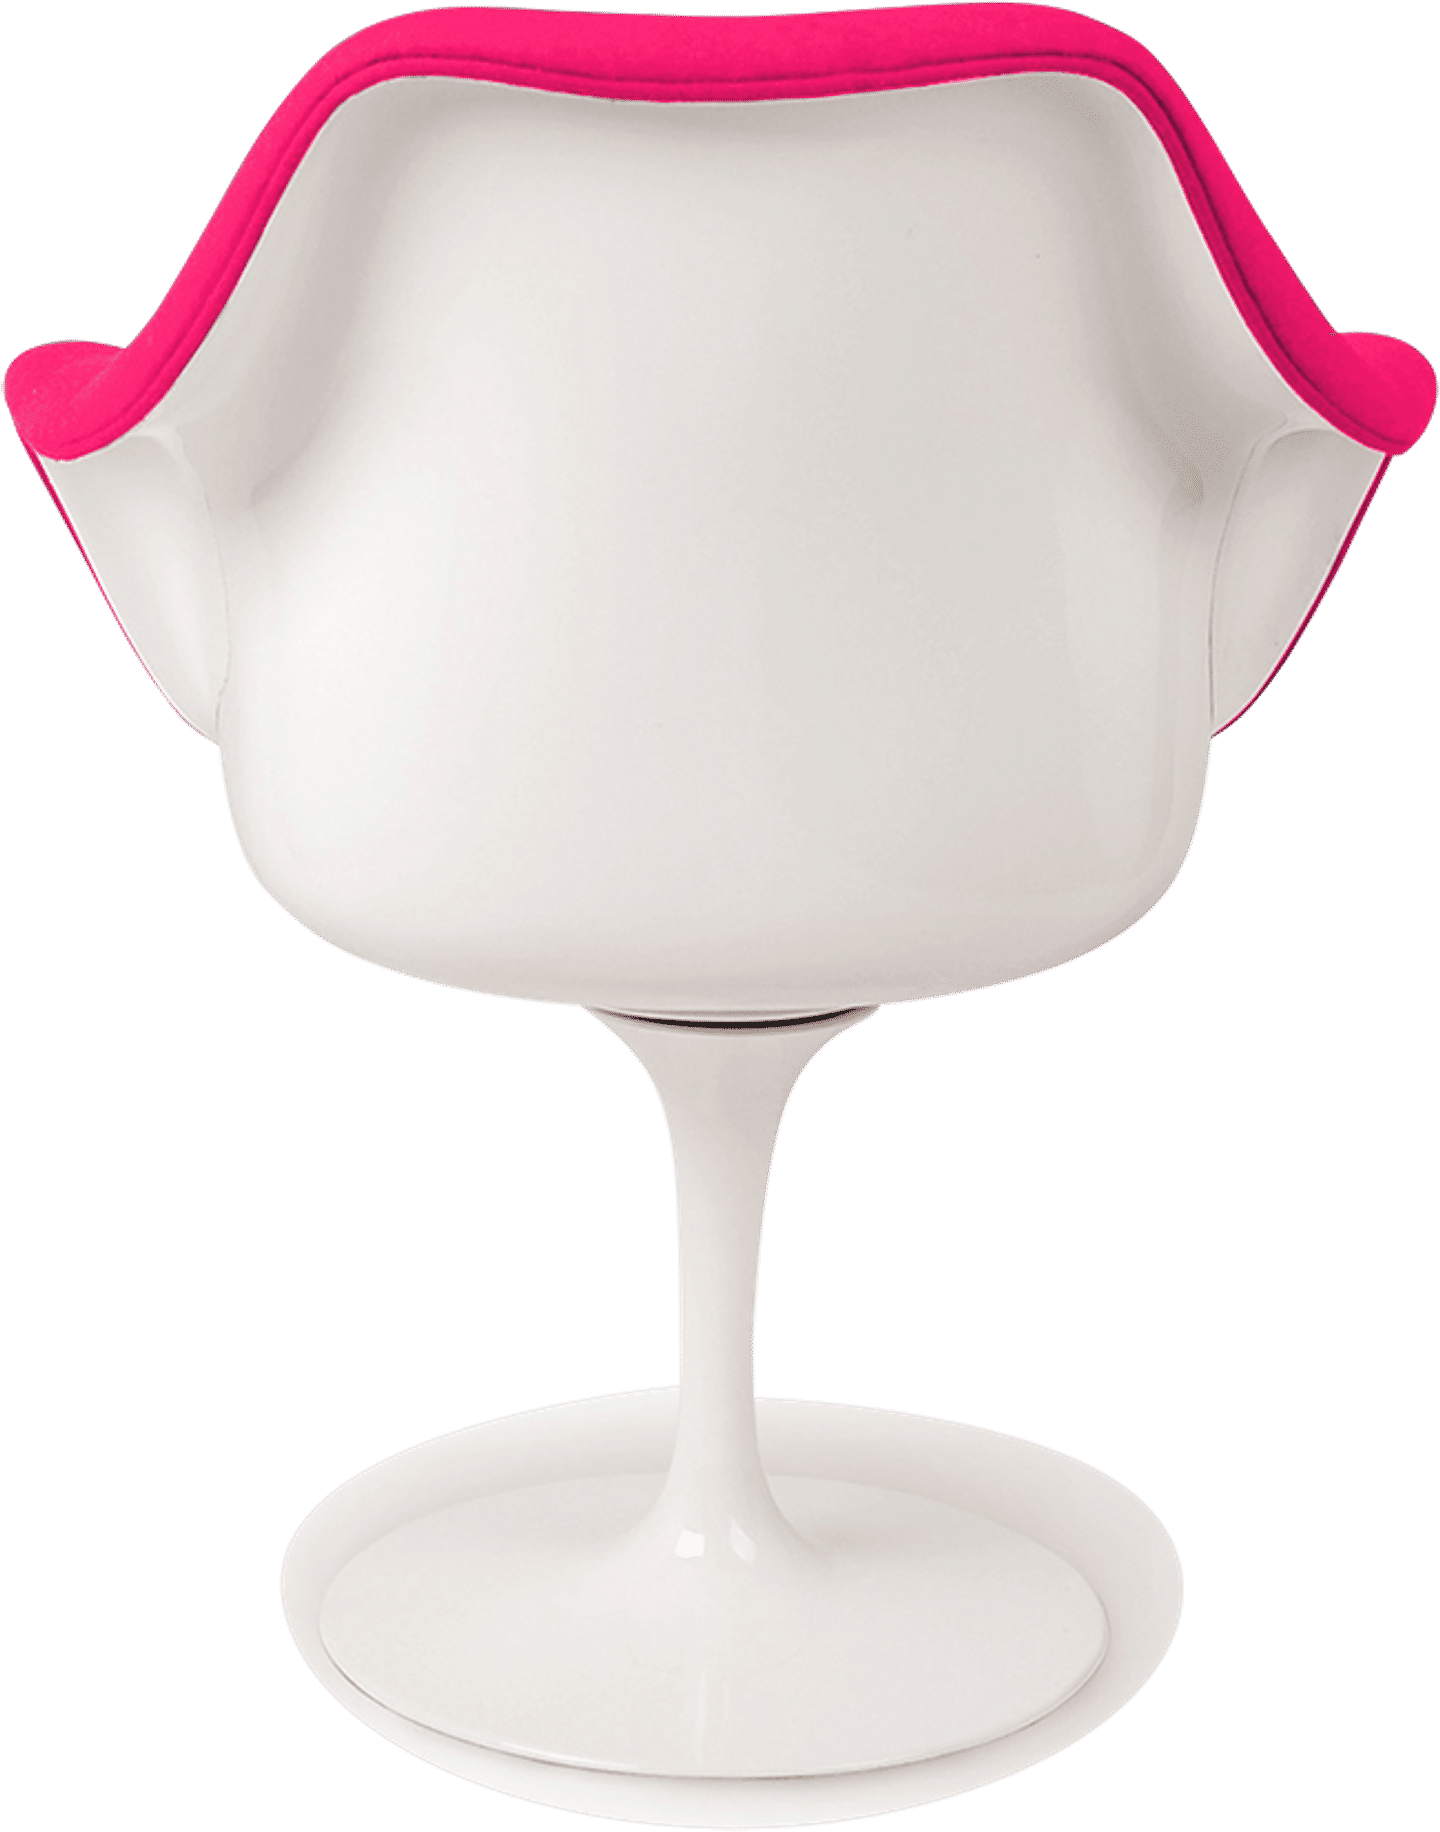 Silla Tulip Carver Pink/White image.